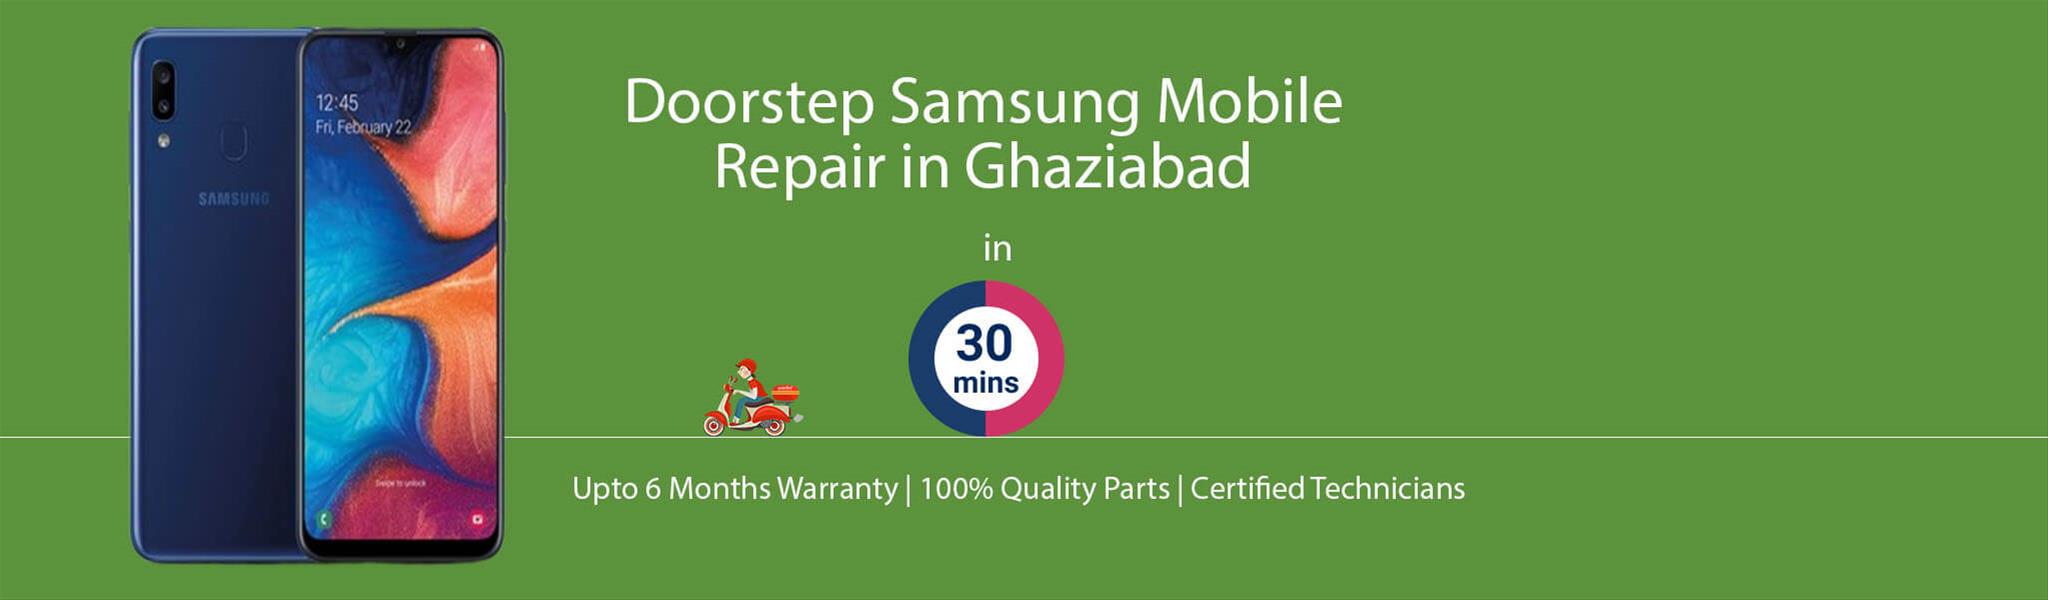 samsung-repair-service-banner-ghaziabad.jpg